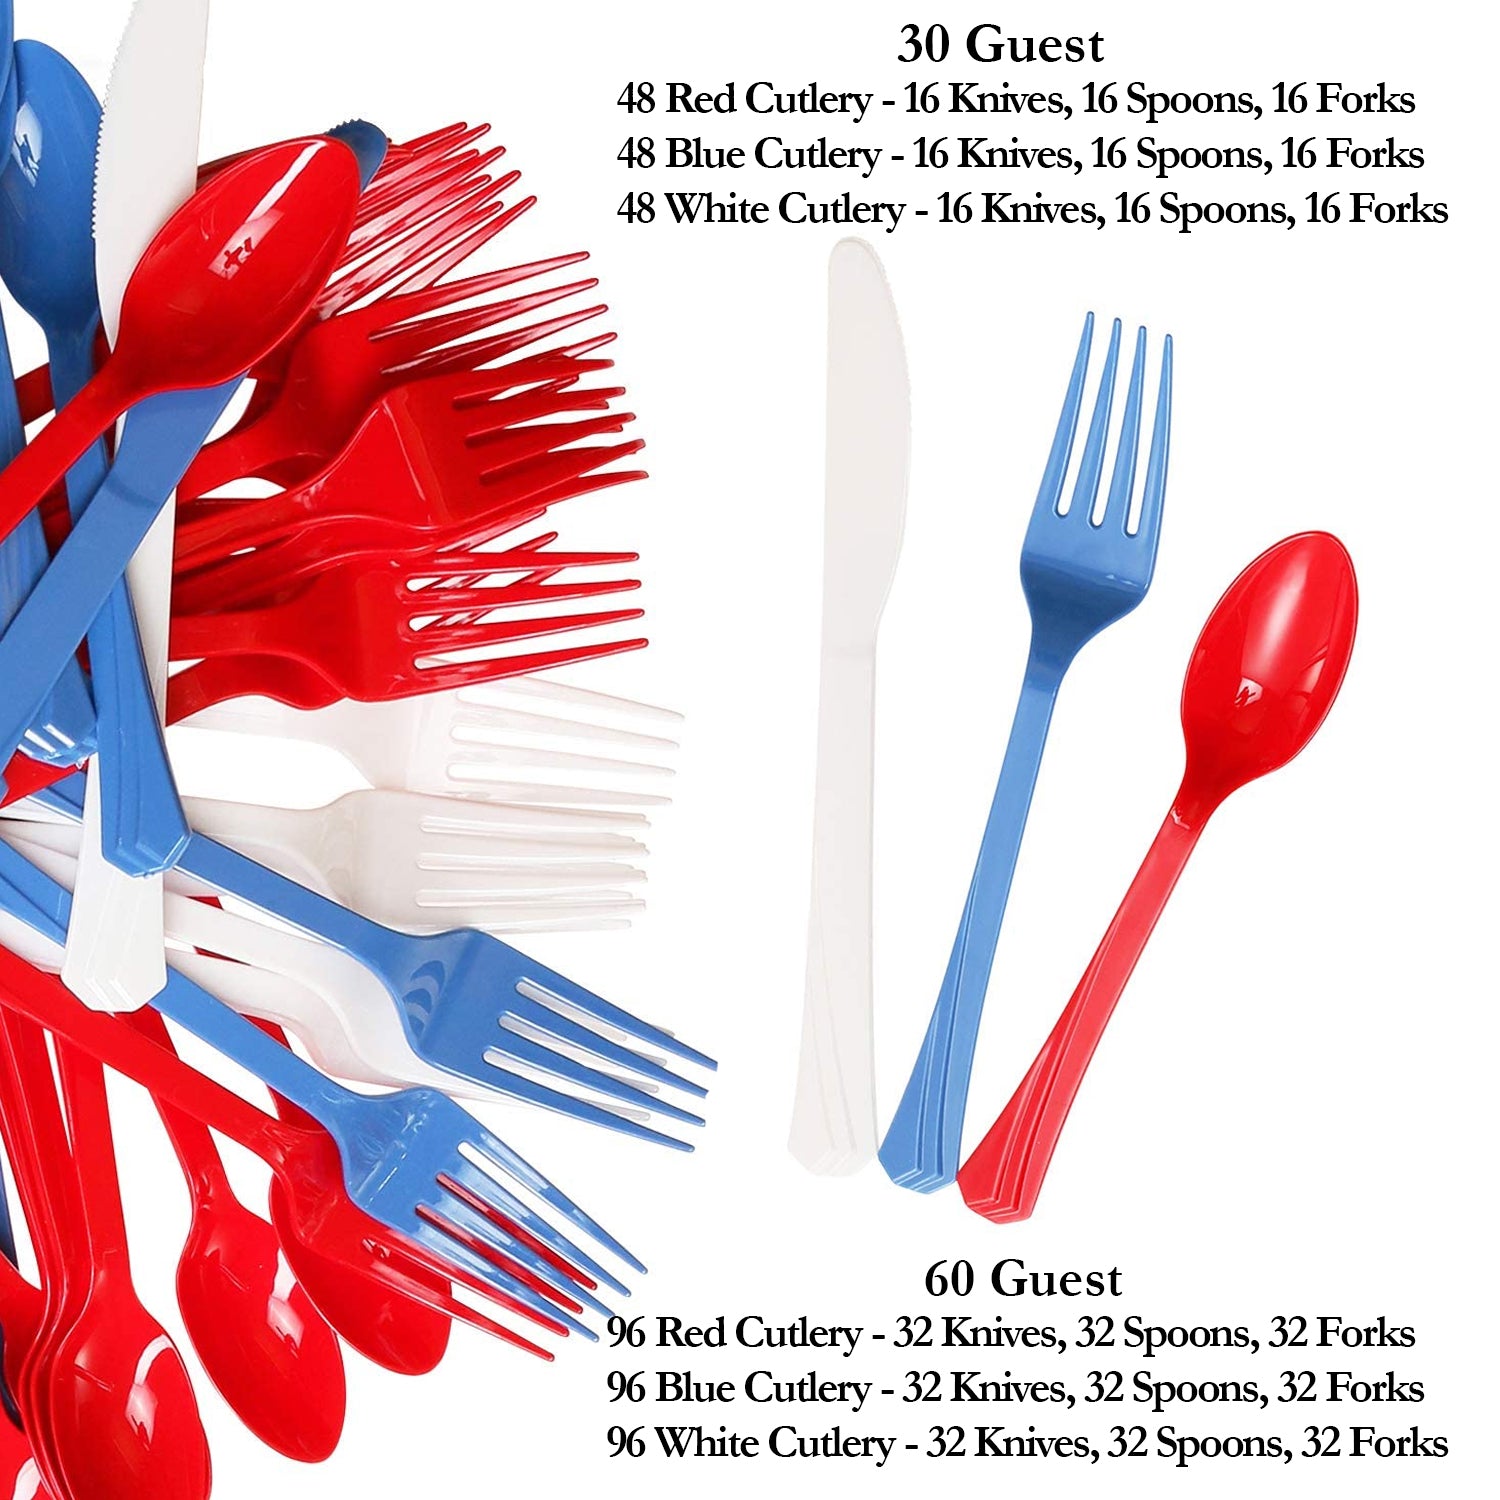 Blue Plastic Fork & Spoon Cutlery Set - 16 Ct.